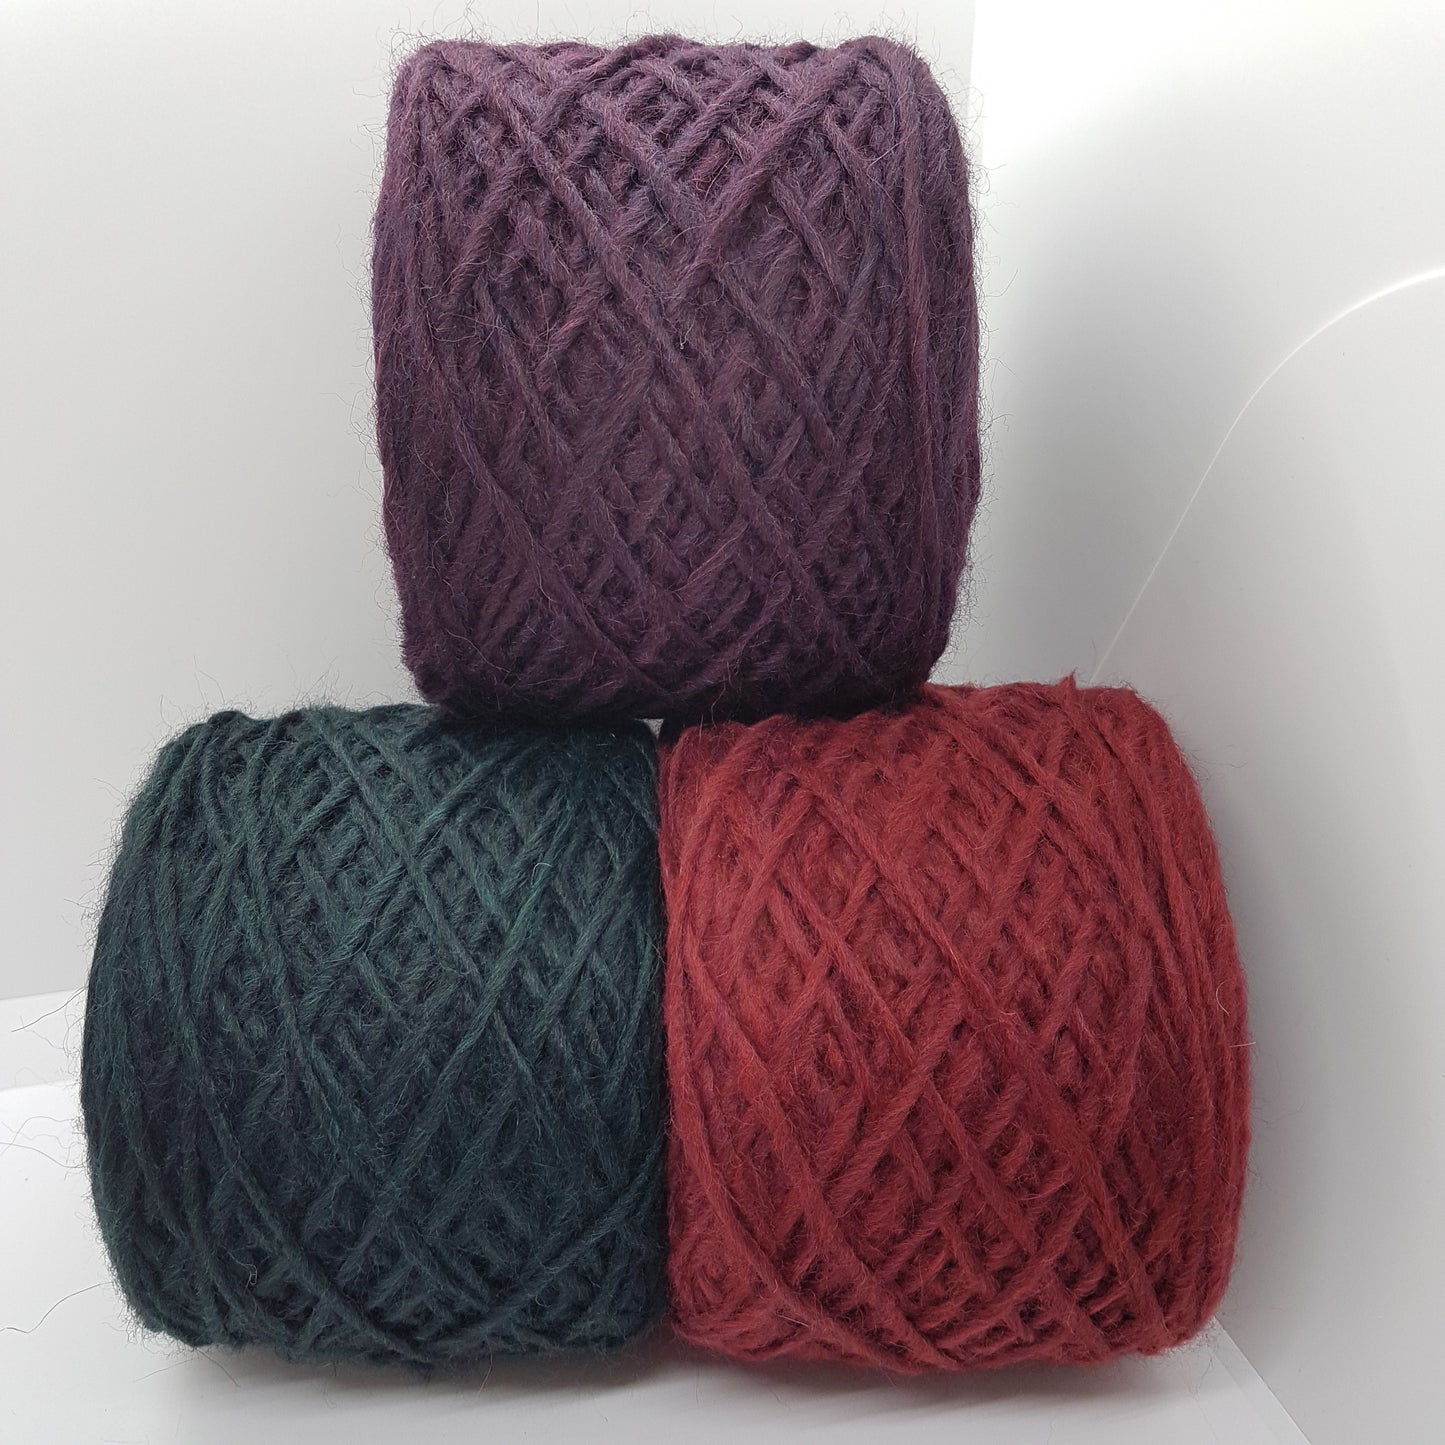 100g alpaca Soft Superfine Italian Yarn Couleur vert italien marron / rouge Mélange N.194